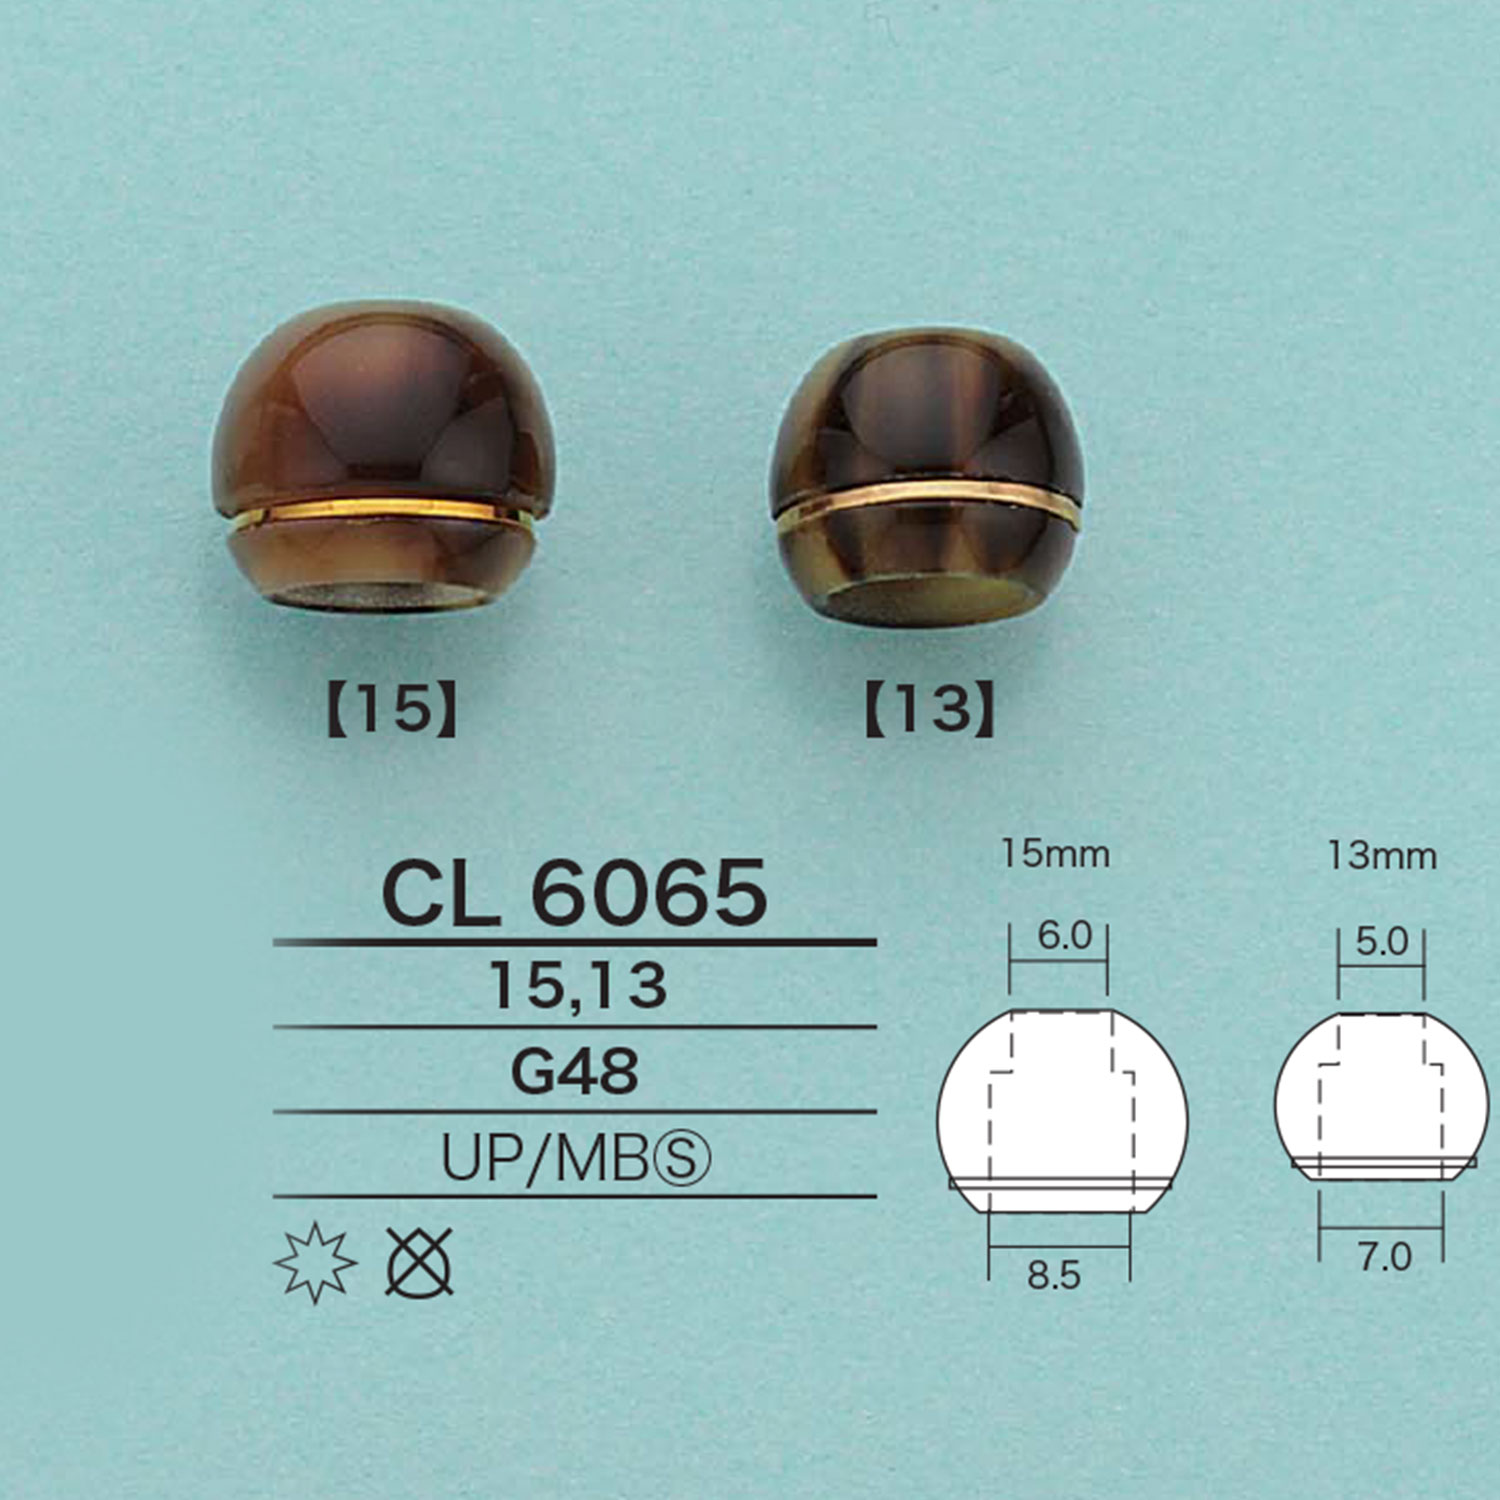 CL6065 丸型コードエンド[バックル・カン類] アイリス